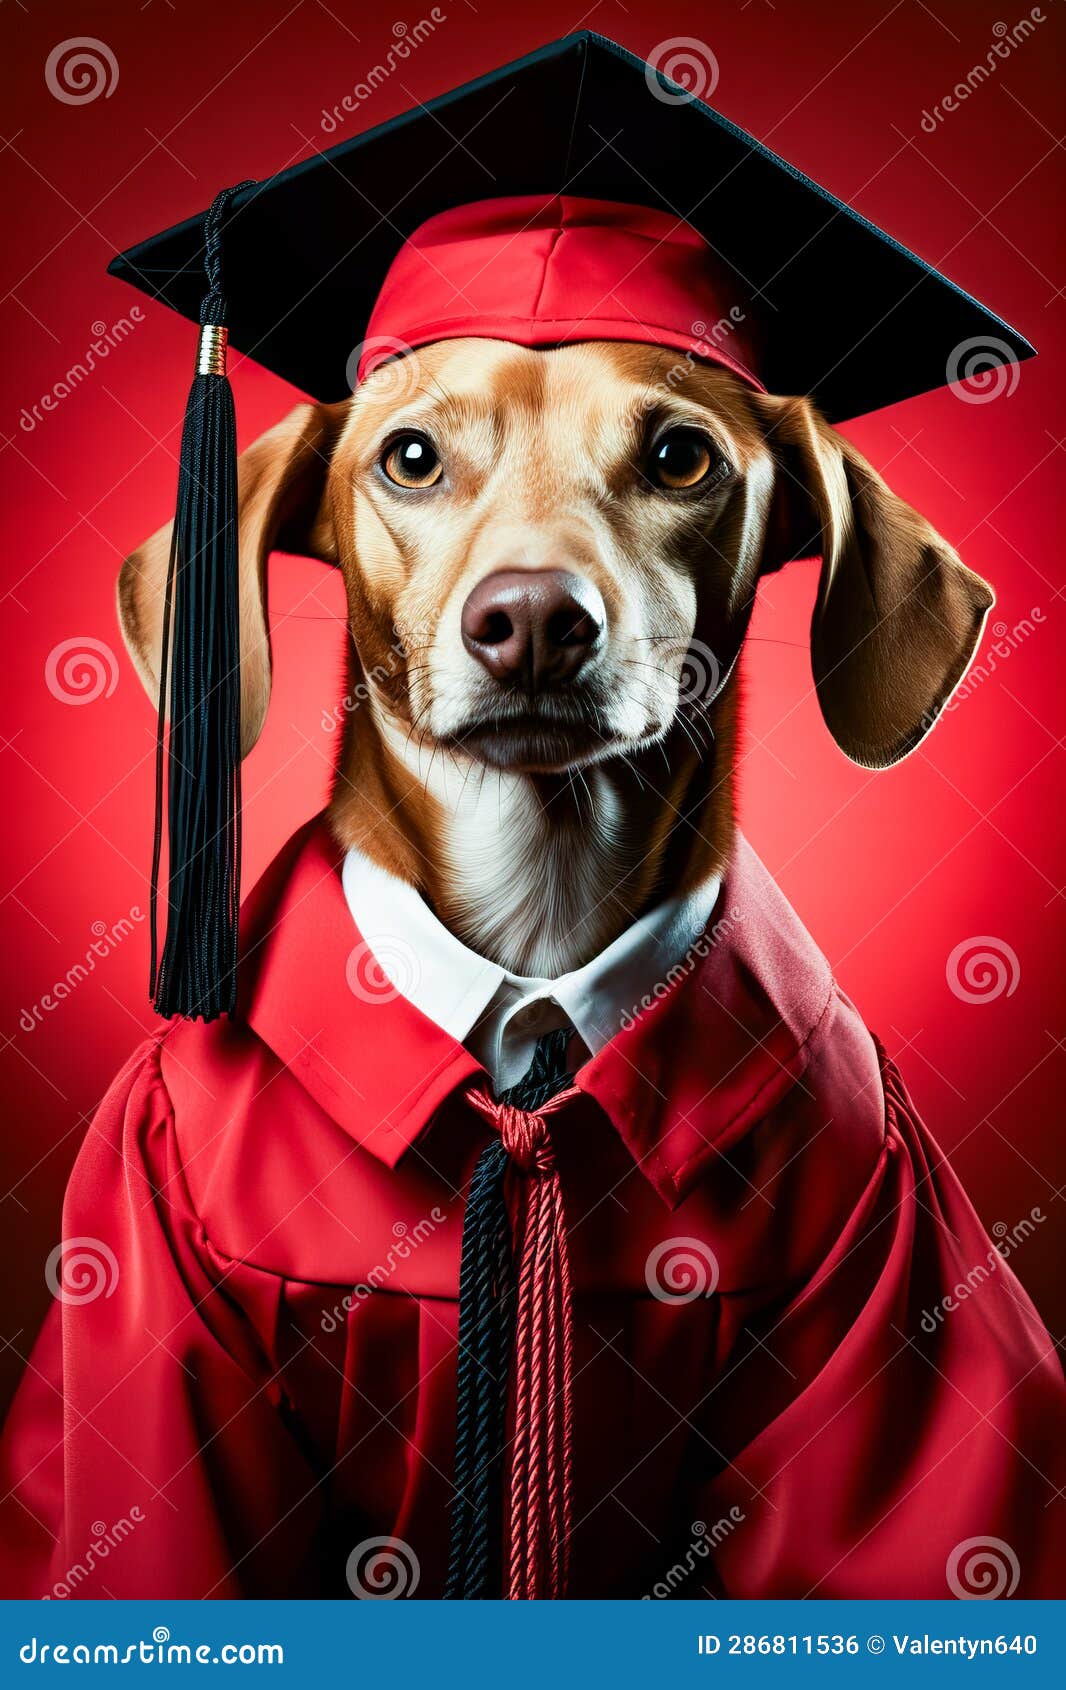 They only had big dog graduation caps at obedience school (x-post /r/aww) :  r/Dachshund